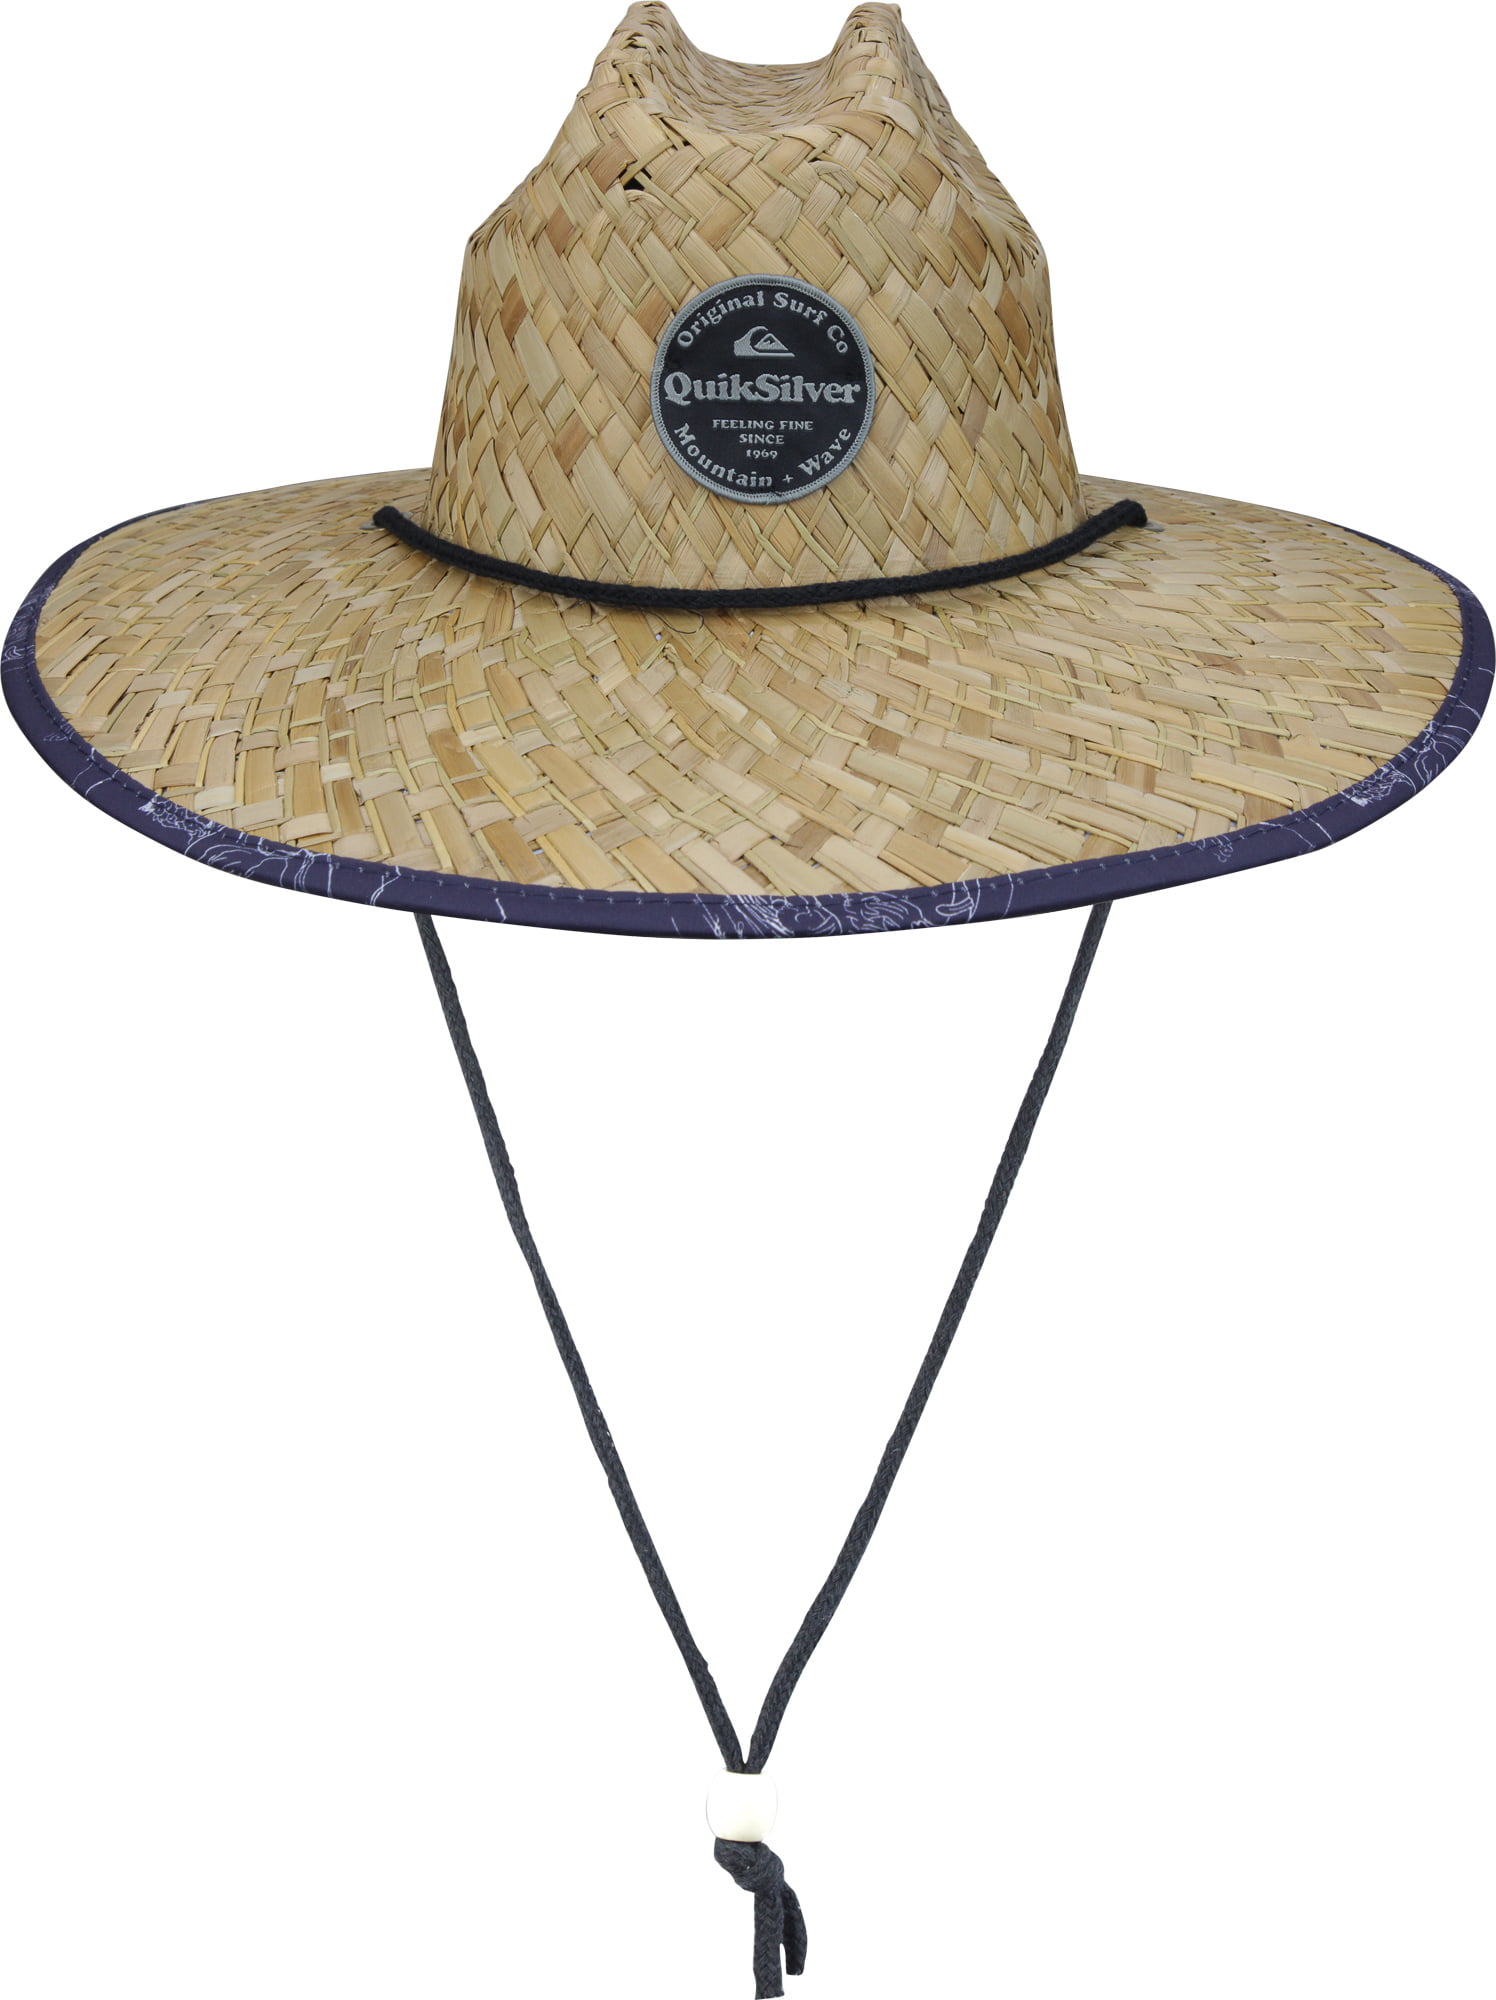 Quiksilver Mens Outsider Repent Wide Brim Sun Hat - Straw/Tarmac Gray